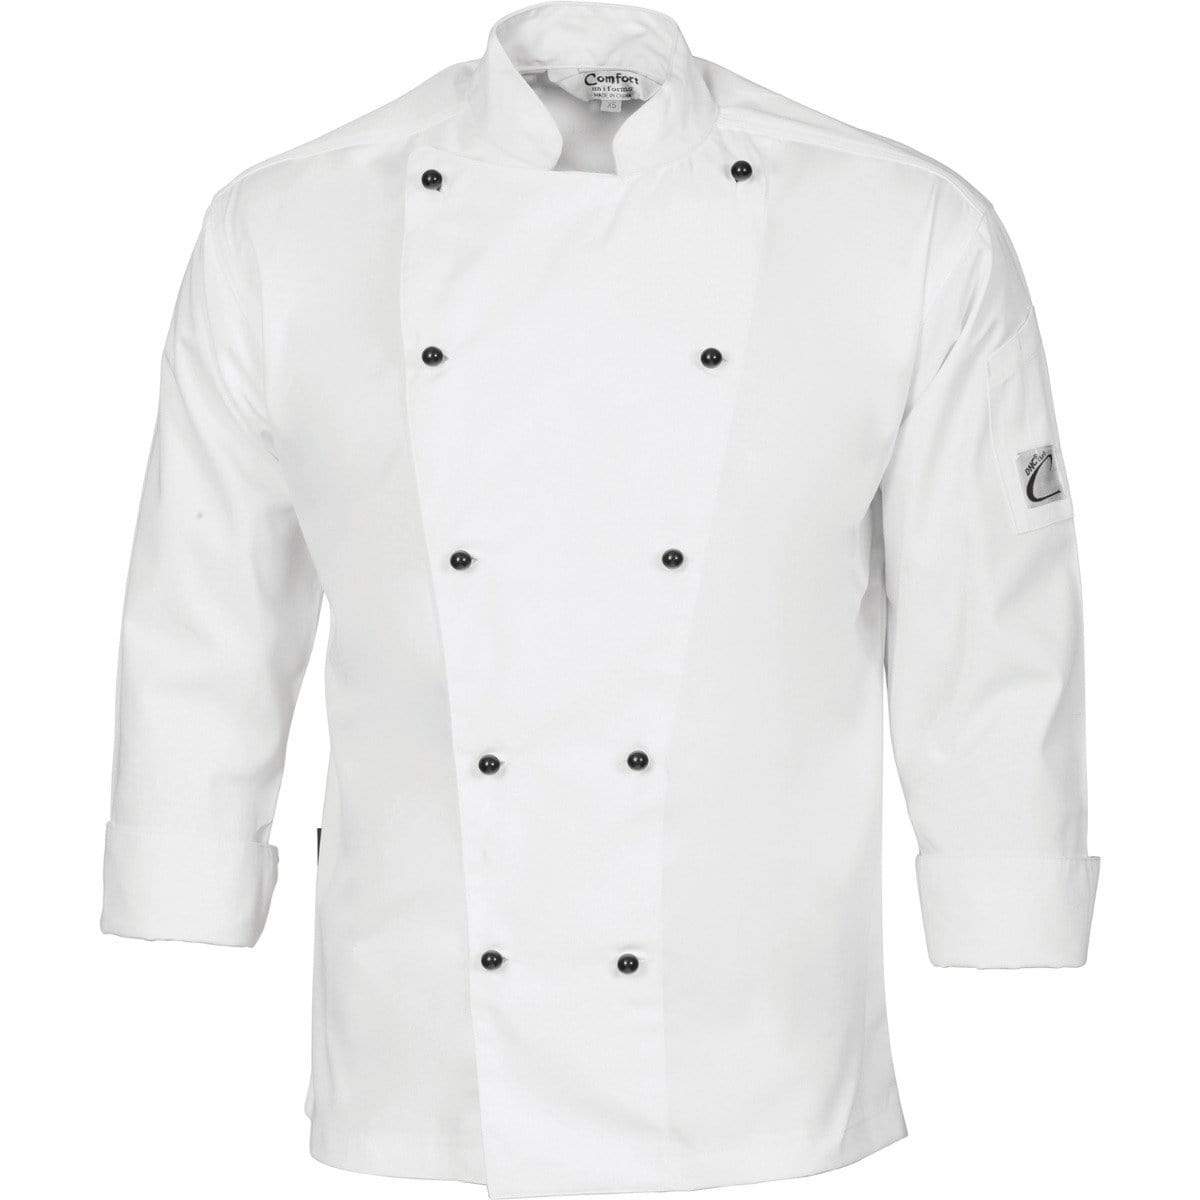 Dnc Workwear Cool-breeze Cotton Long Sleeve Chef Jacket - 1104 Hospitality & Chefwear DNC Workwear White XS 